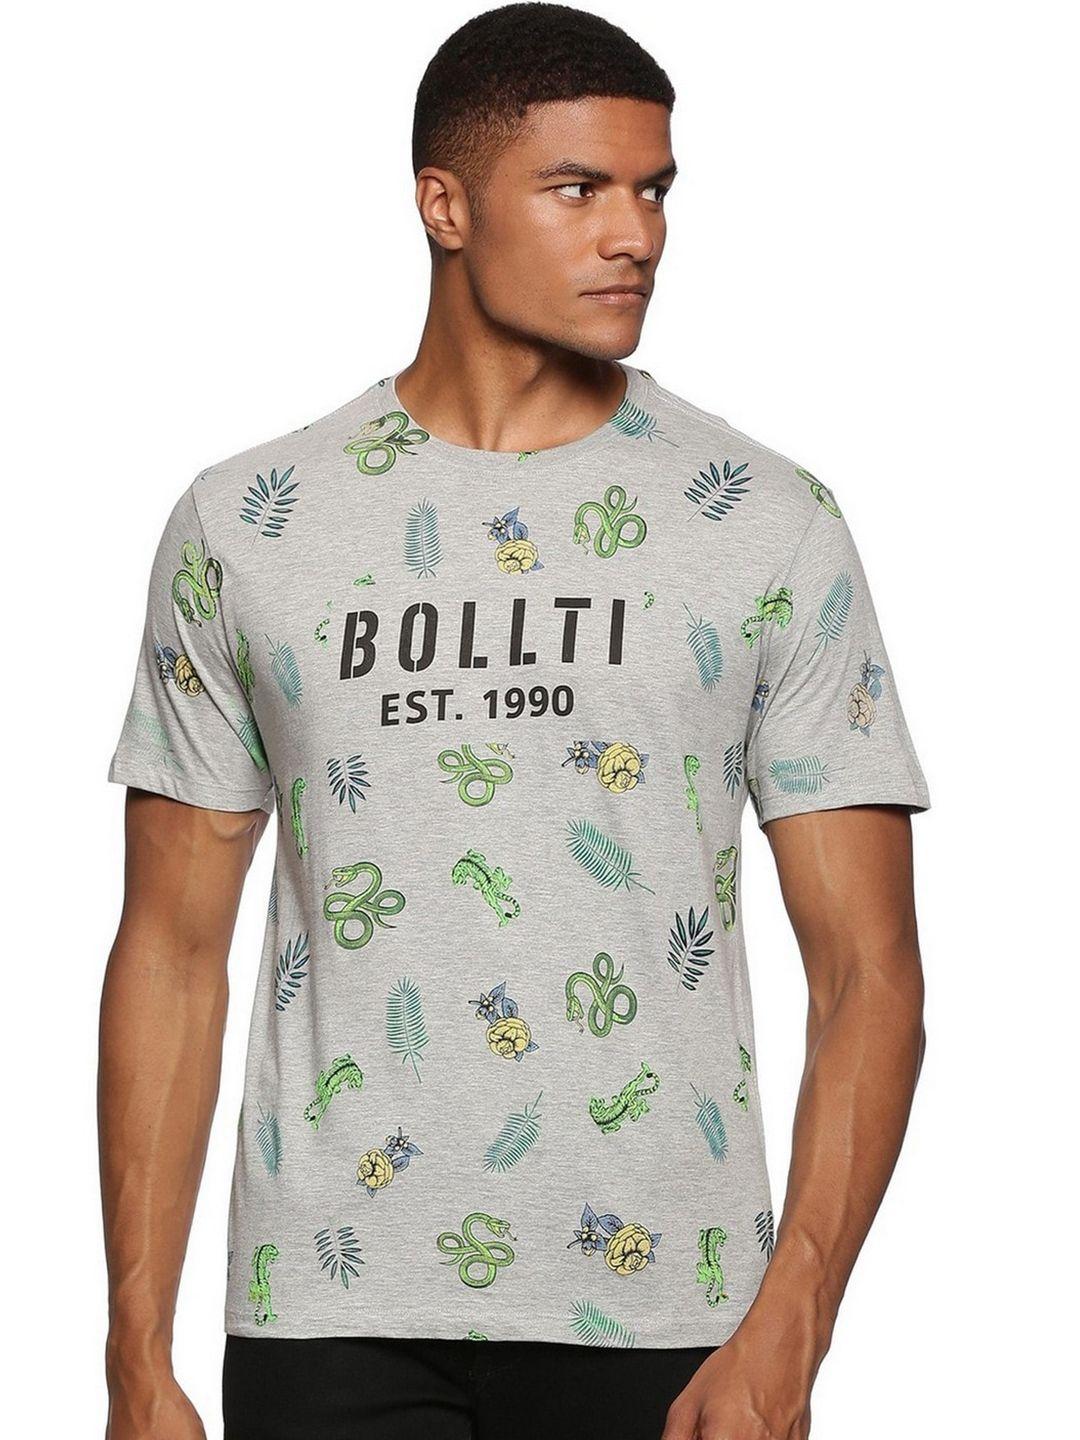 bollti conversational printed pure cotton t-shirt